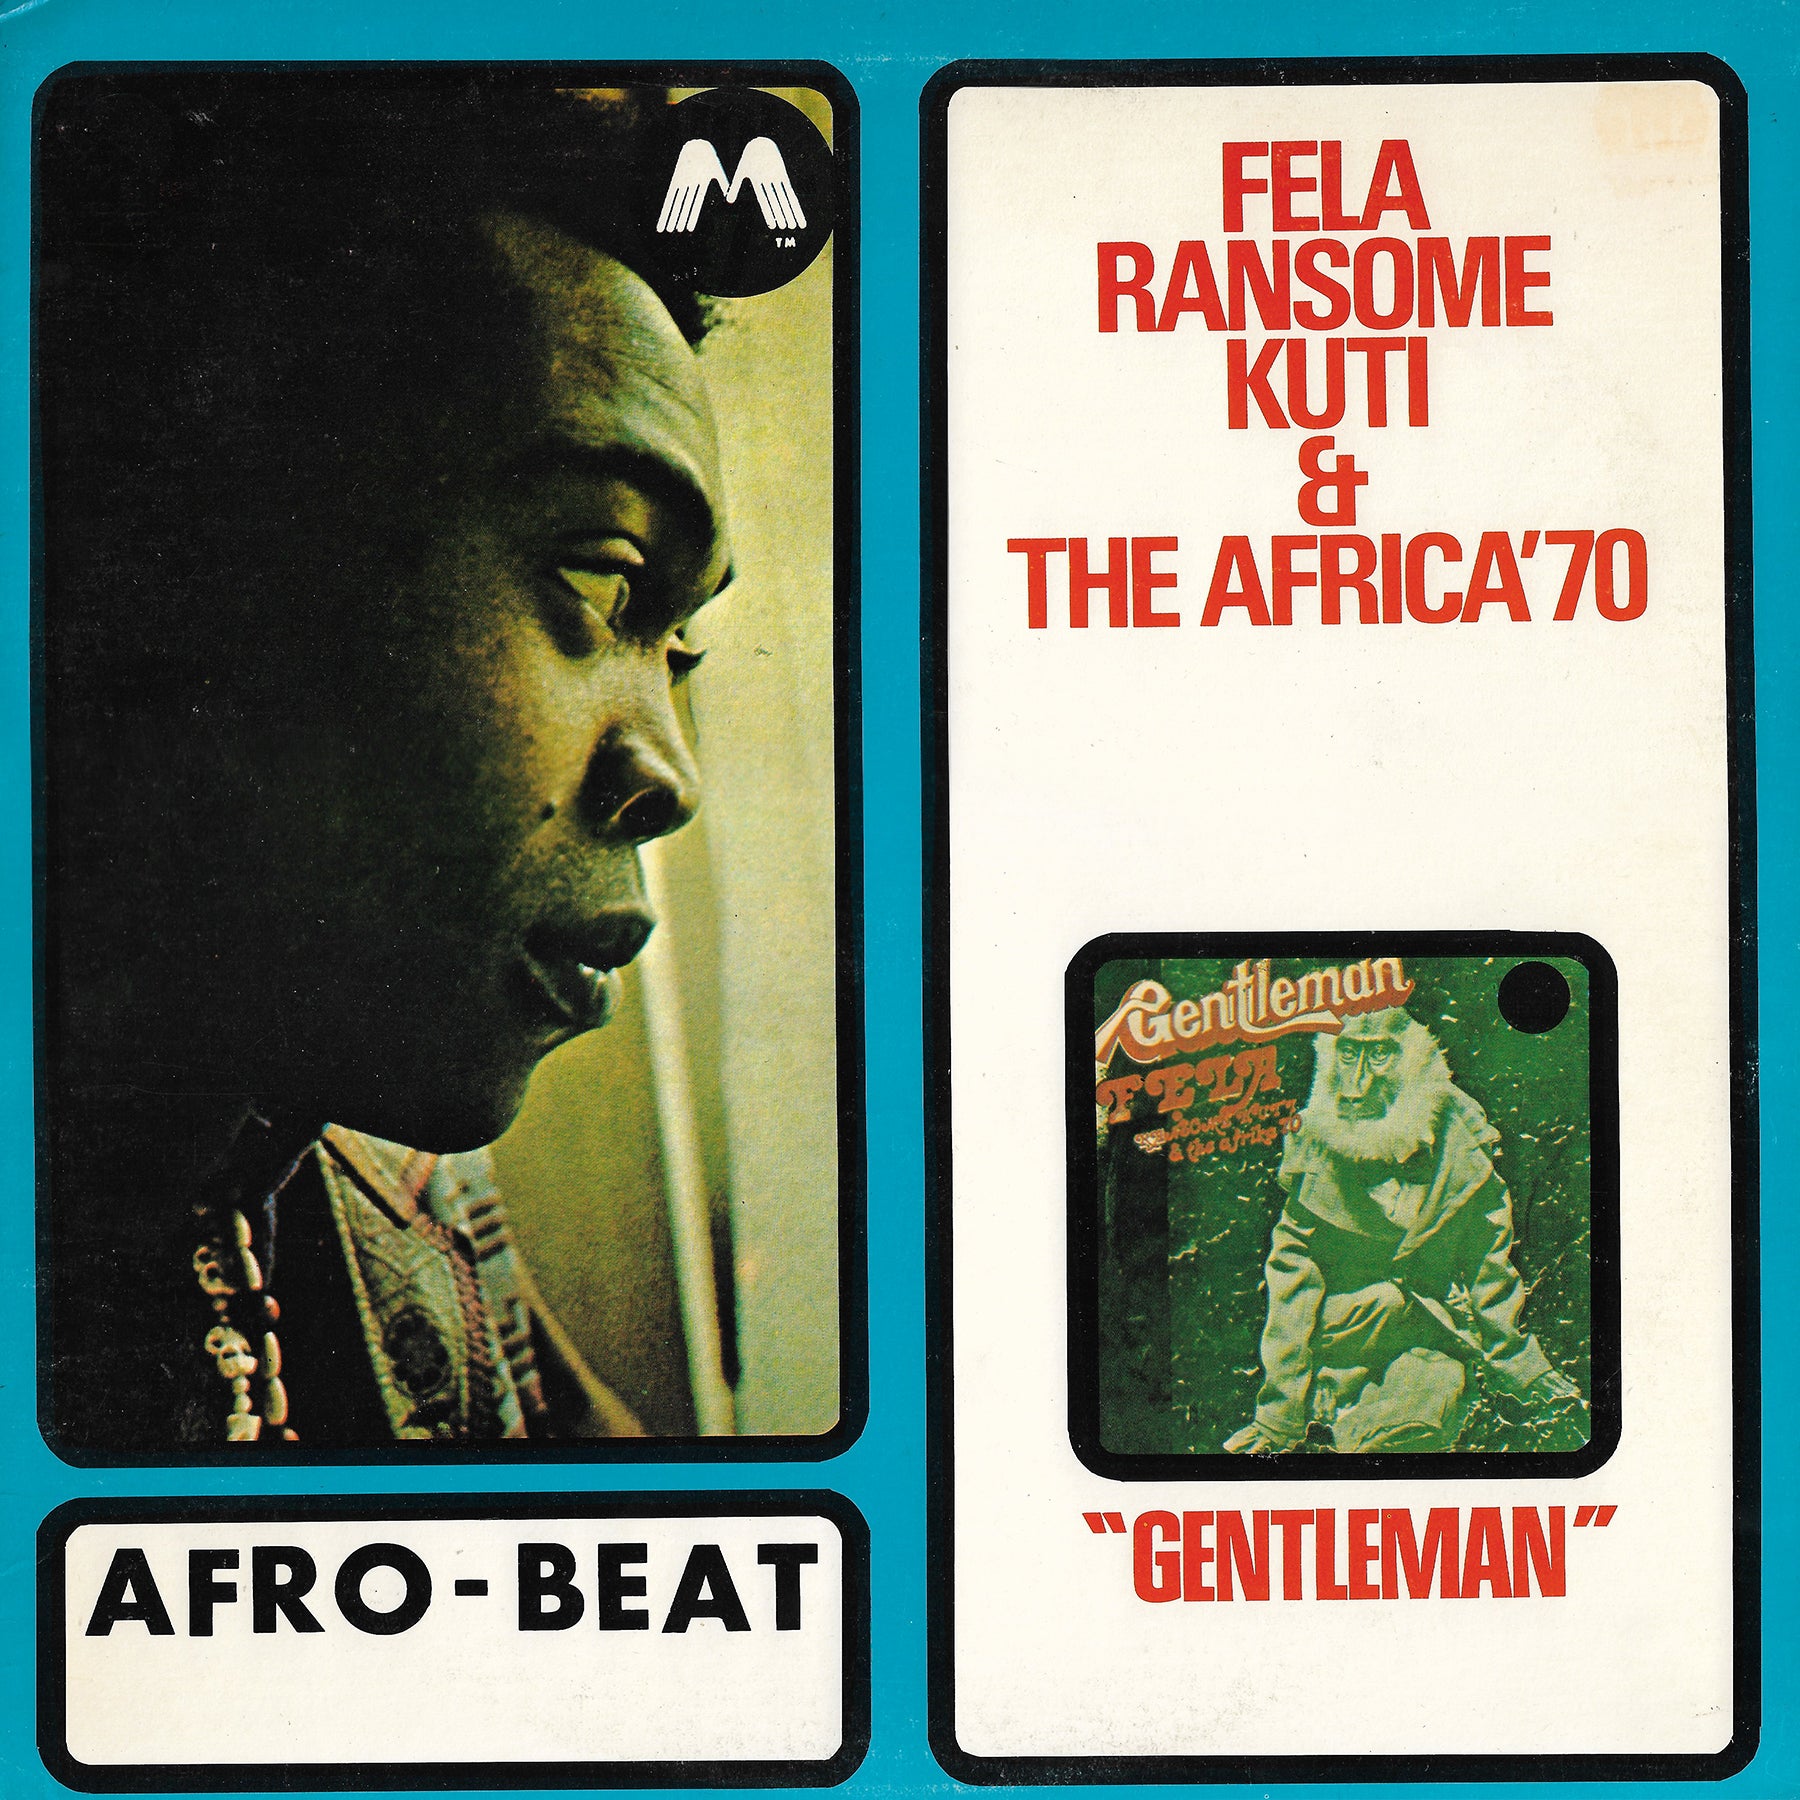 Fela Ransome Kuti & The Africa 70 - Gentleman